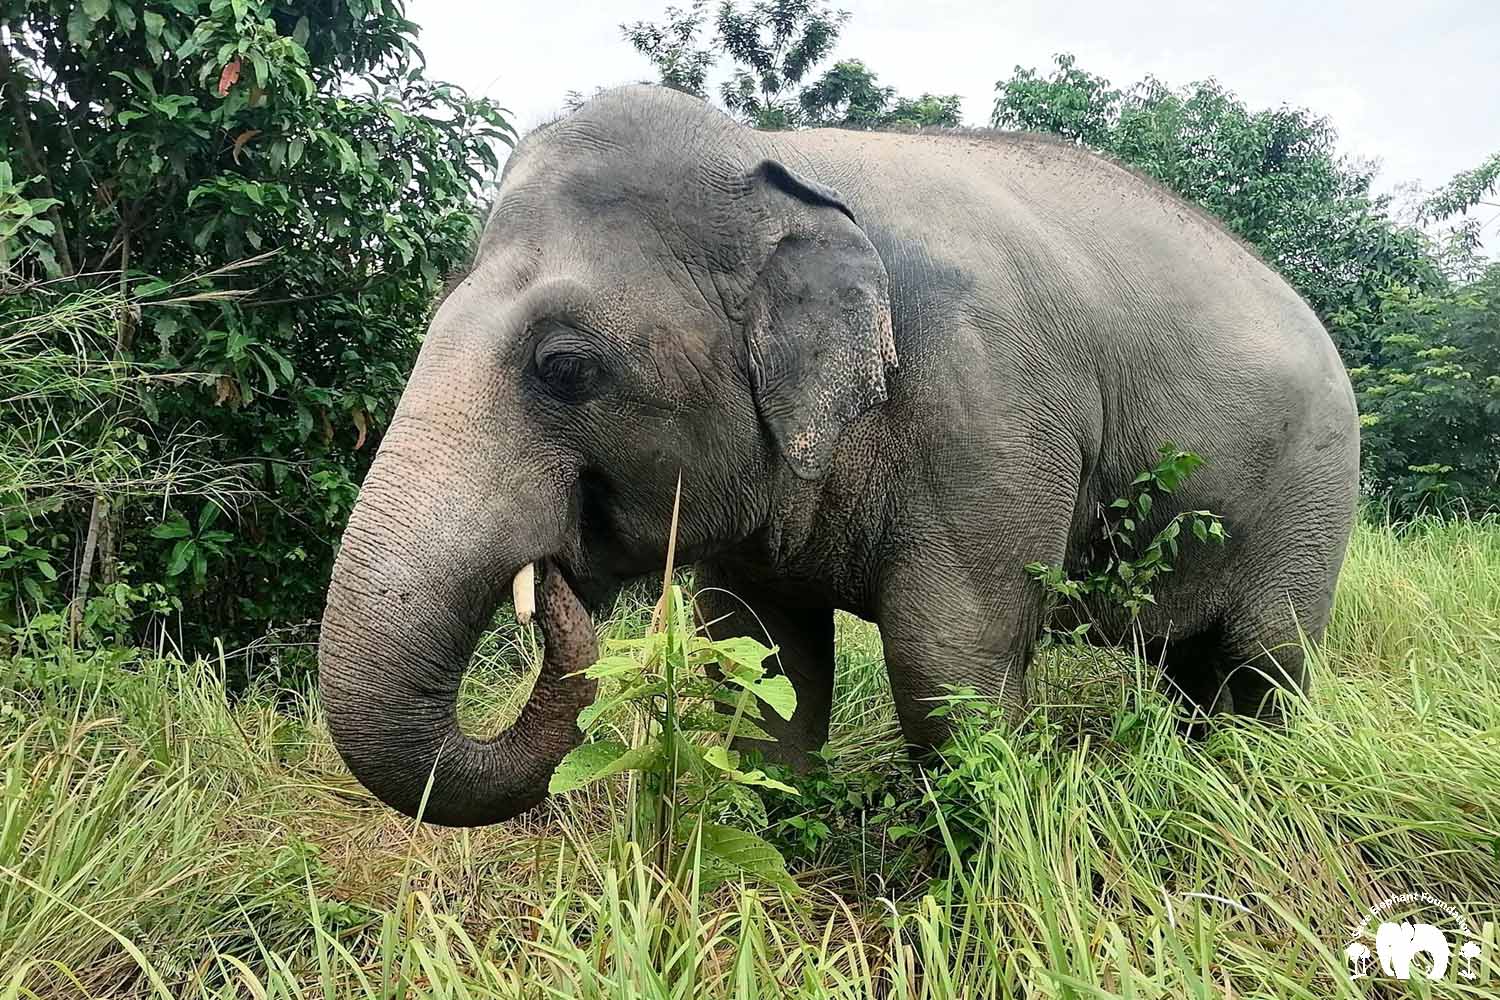 Male Elephant Kaavan wanders the grasslands at Cambodia Wildlife Sanctuary